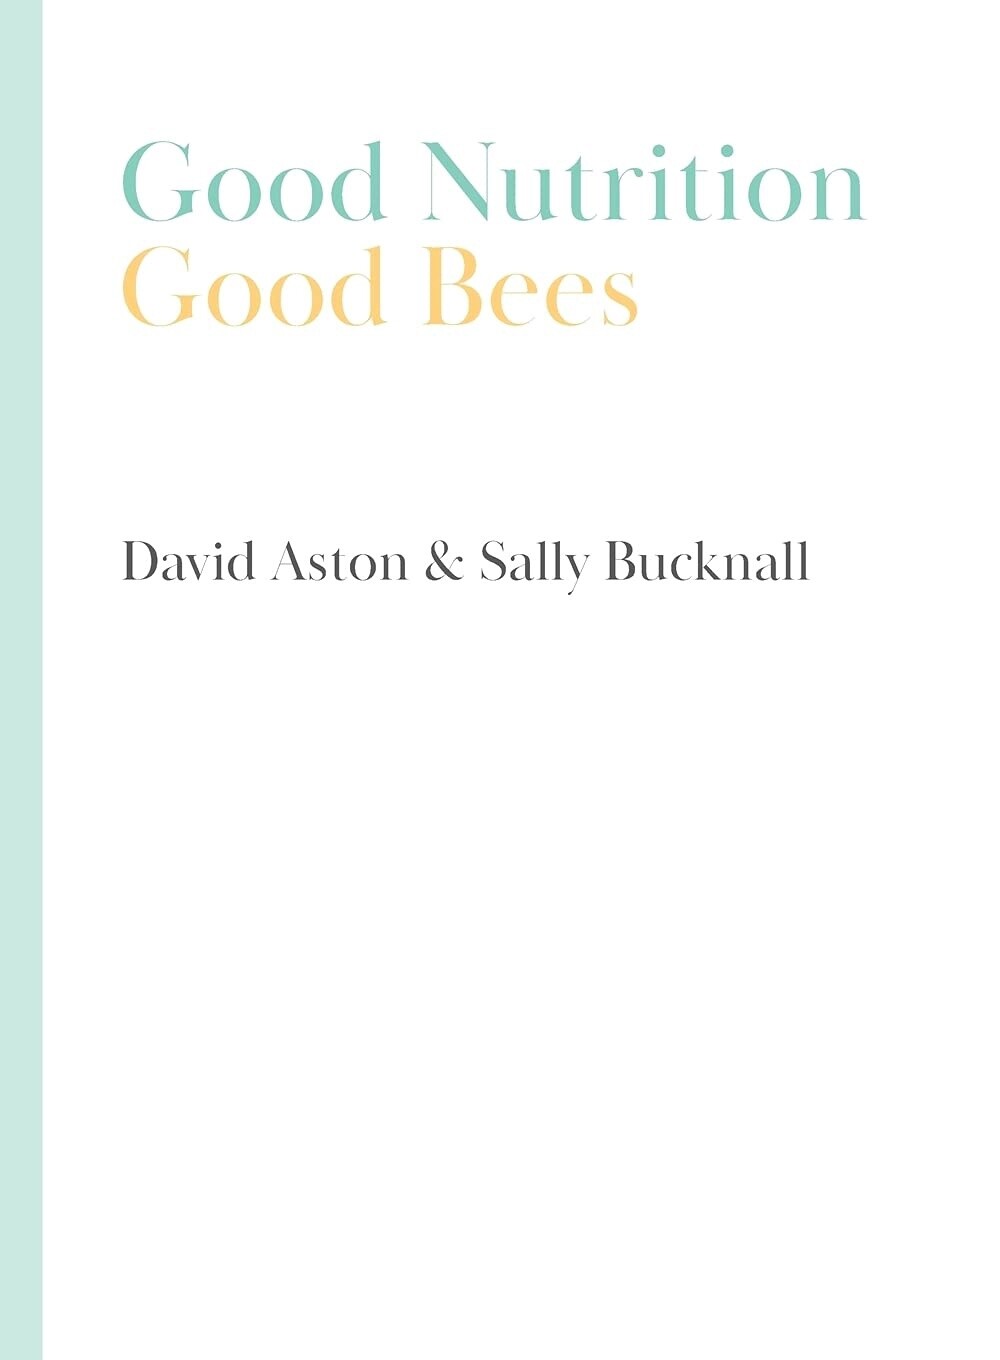 Good Nutrition - Good Bees by David Aston & Sally Bucknall